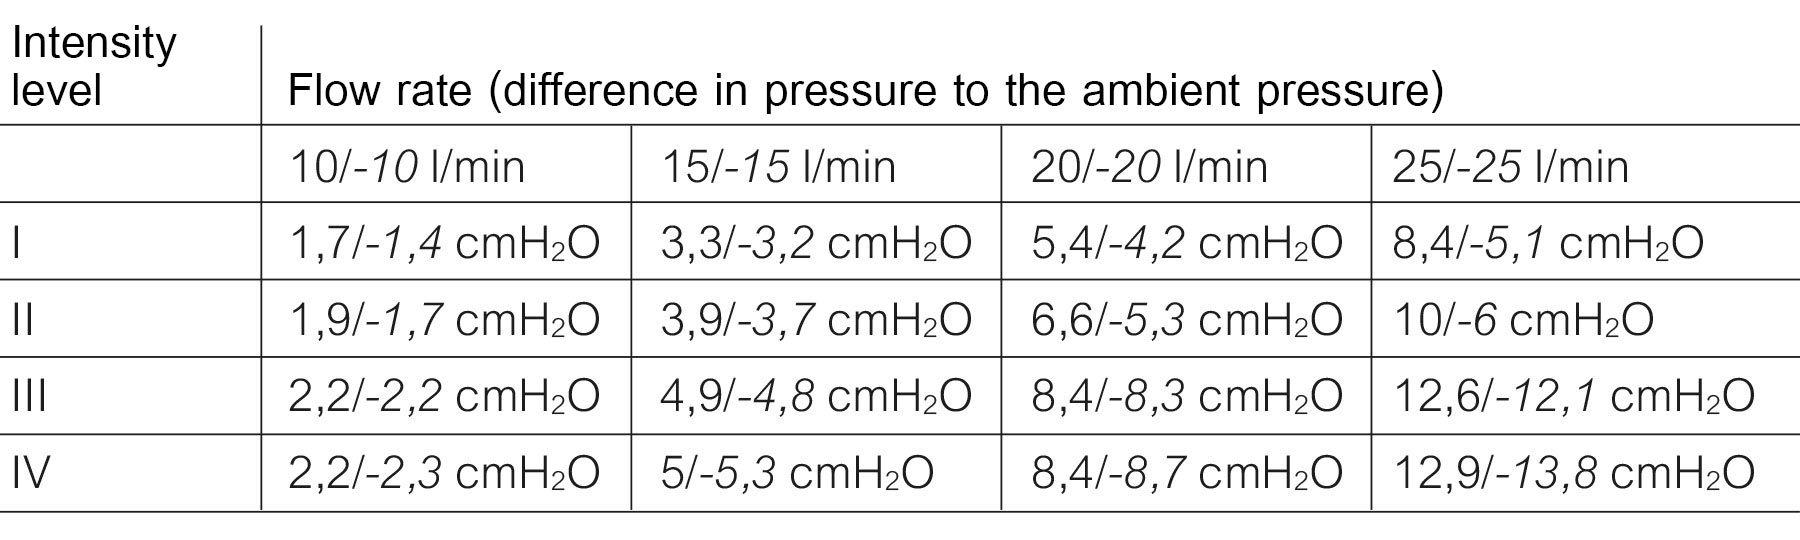 Average pressure during exhalation / inhalation